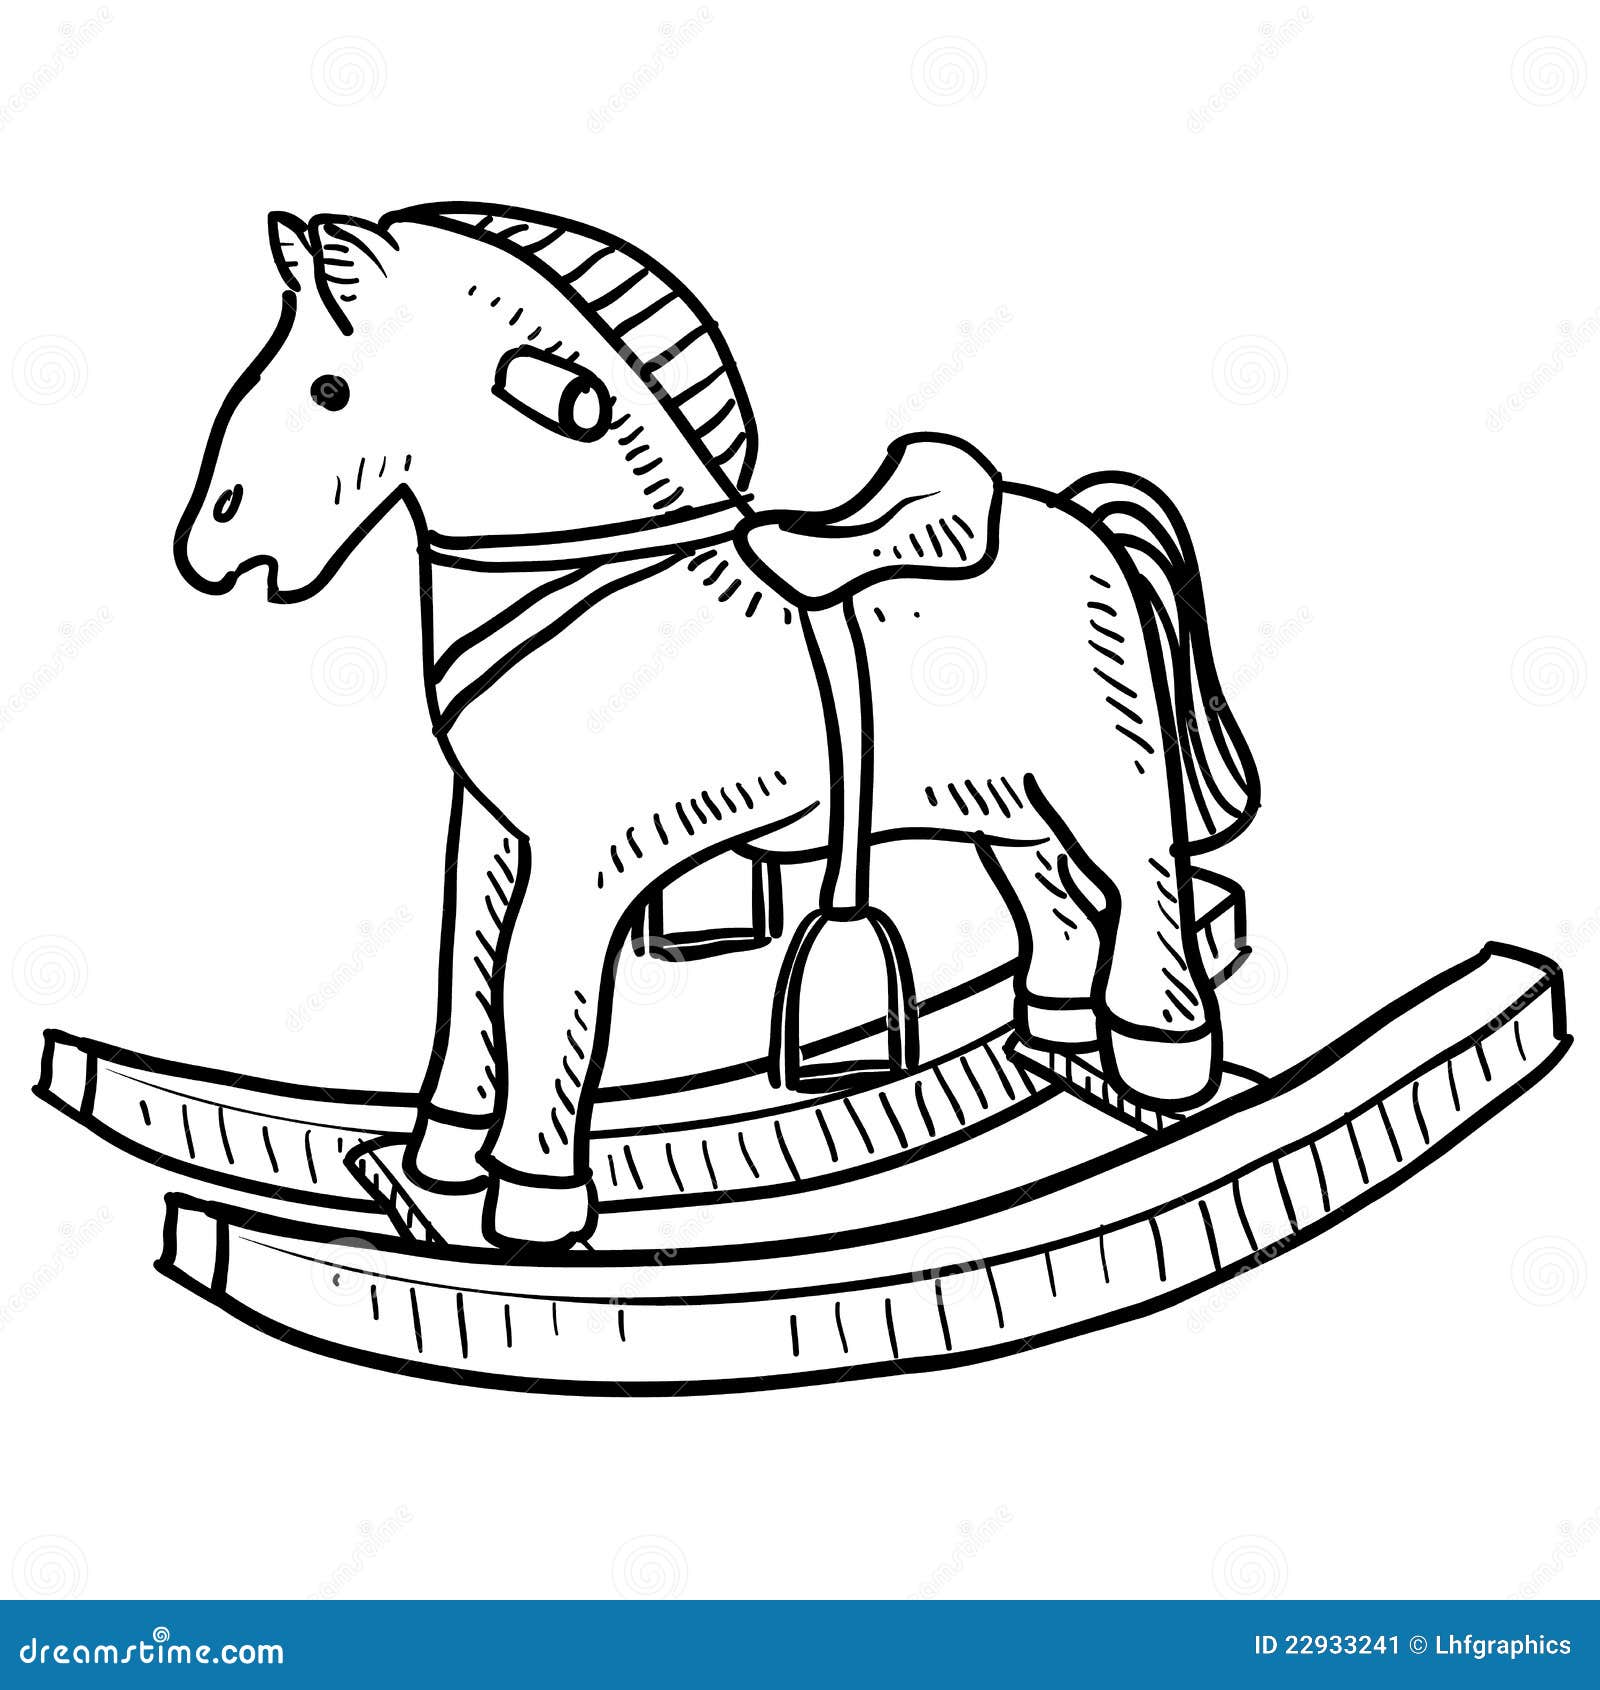 Child S Rocking Horse Sketch Stock Vector - Illustration of wooden ...